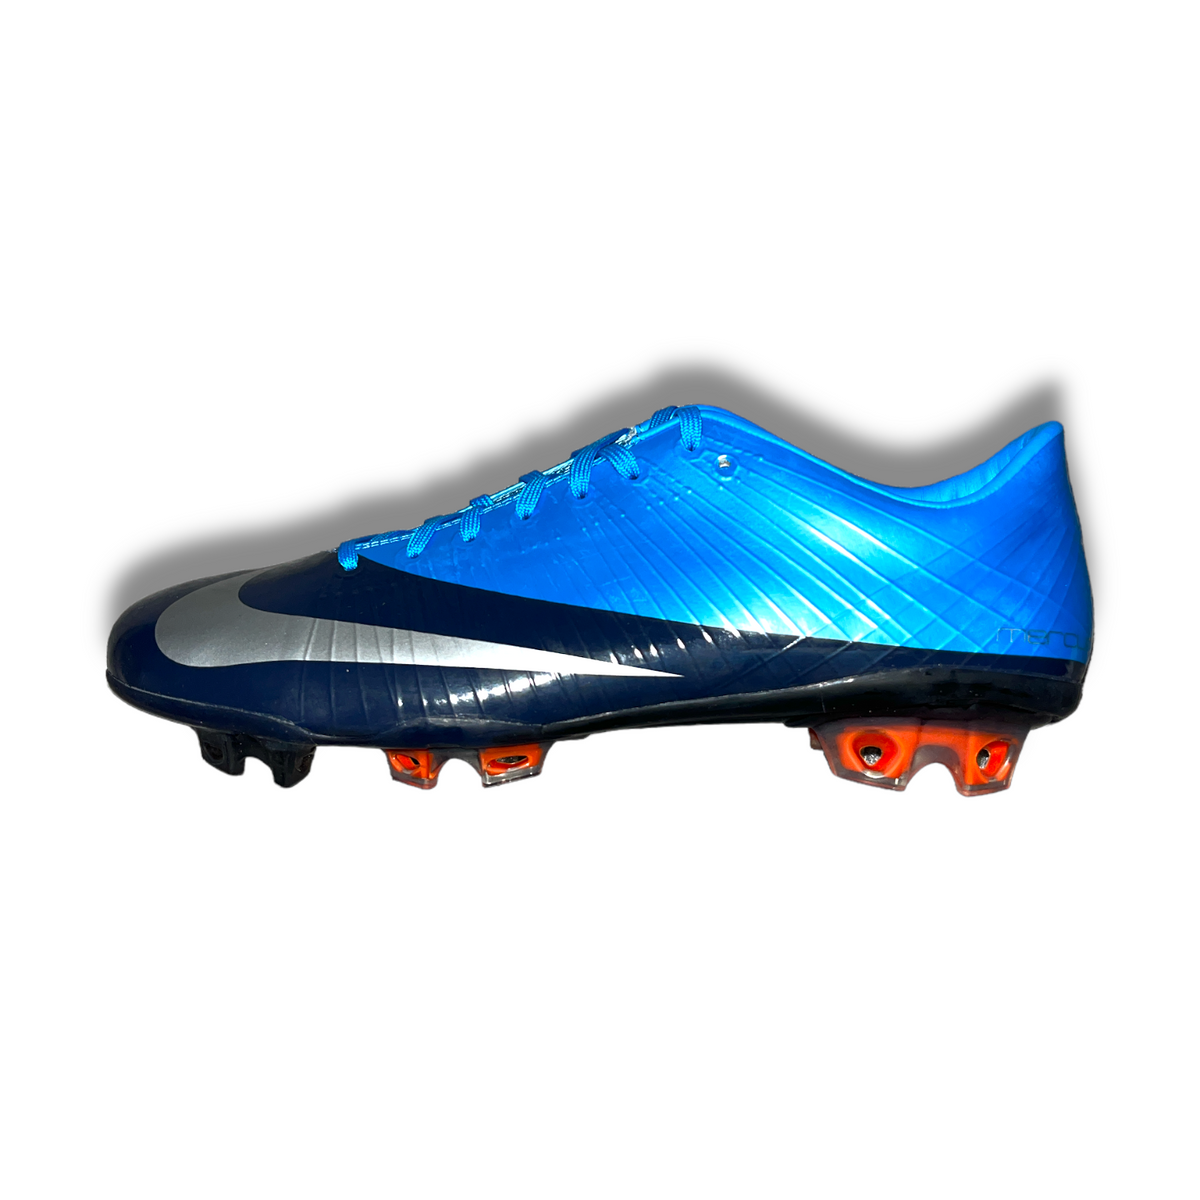 Nike Vapor Superfly FG blue